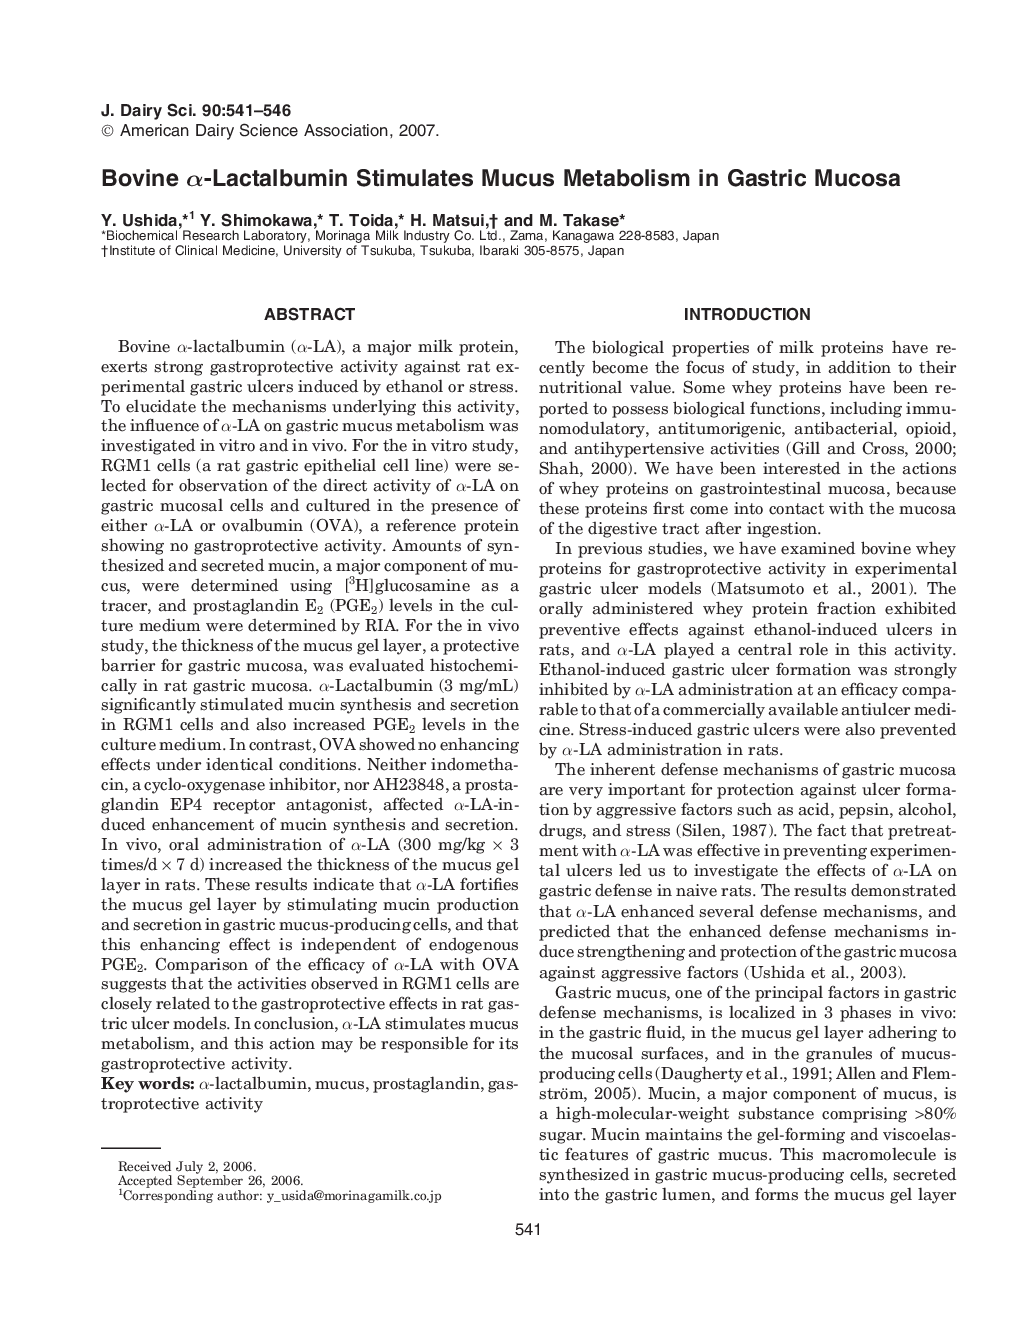 Bovine Î±-Lactalbumin Stimulates Mucus Metabolism in Gastric Mucosa